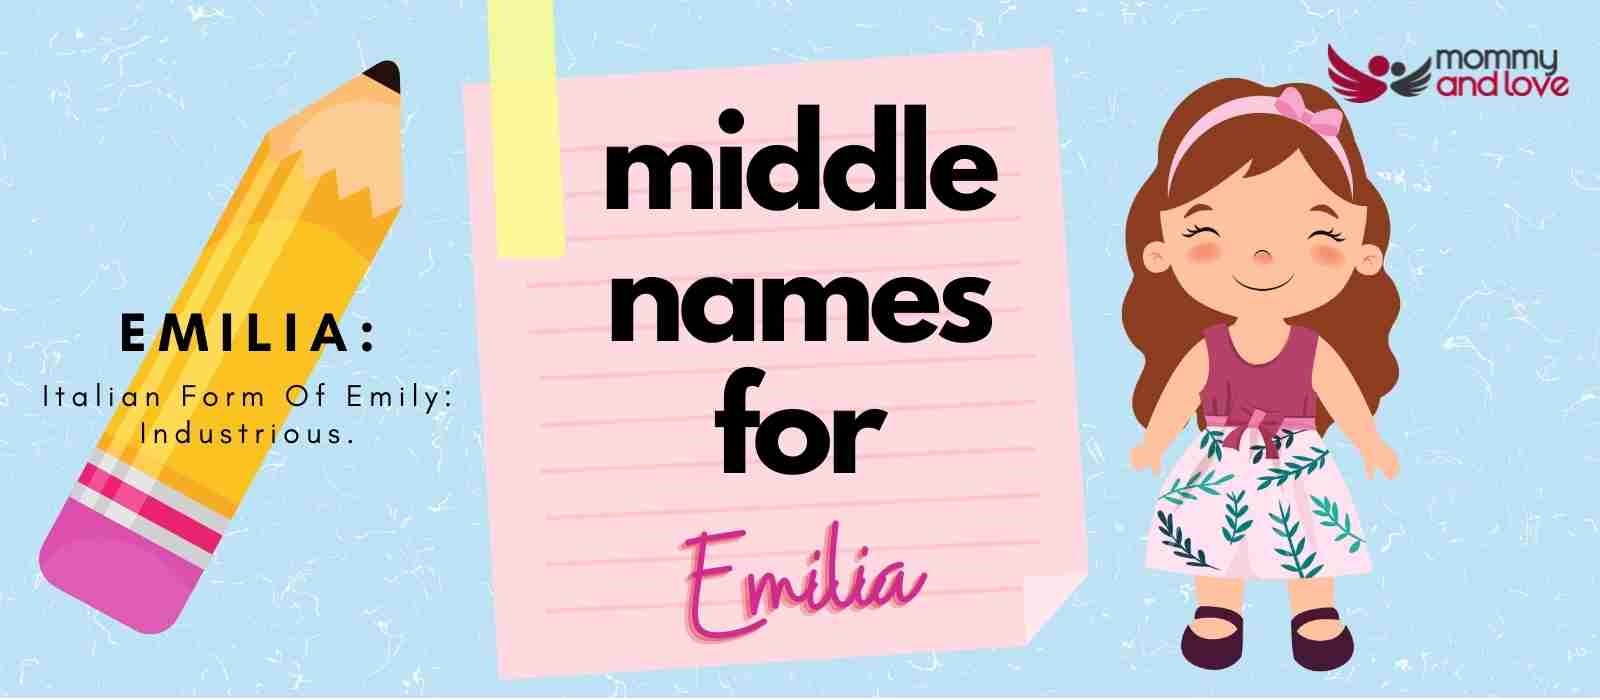 Middle Names for Emilia